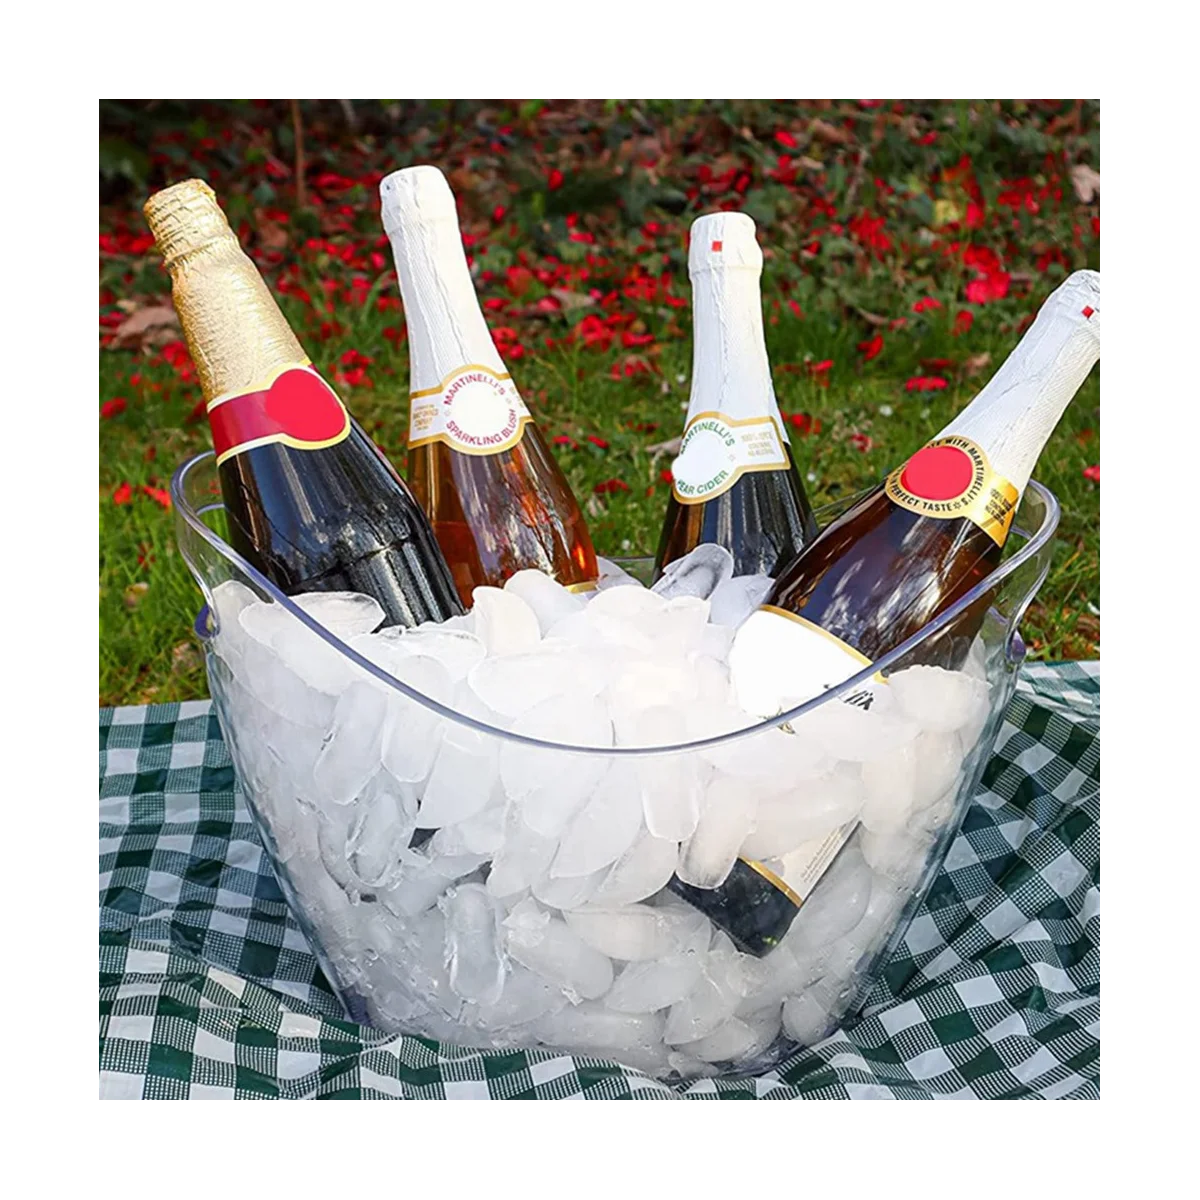 https://ae01.alicdn.com/kf/S6826f44d3b014366ac5a2bf71ecc9523y/2Pcs-Large-Ice-Bucket-for-Cocktail-Bar-Mimosa-Bar-Supplies-Ice-Tub-Champagne-Bucket-Ice-Buckets.jpg